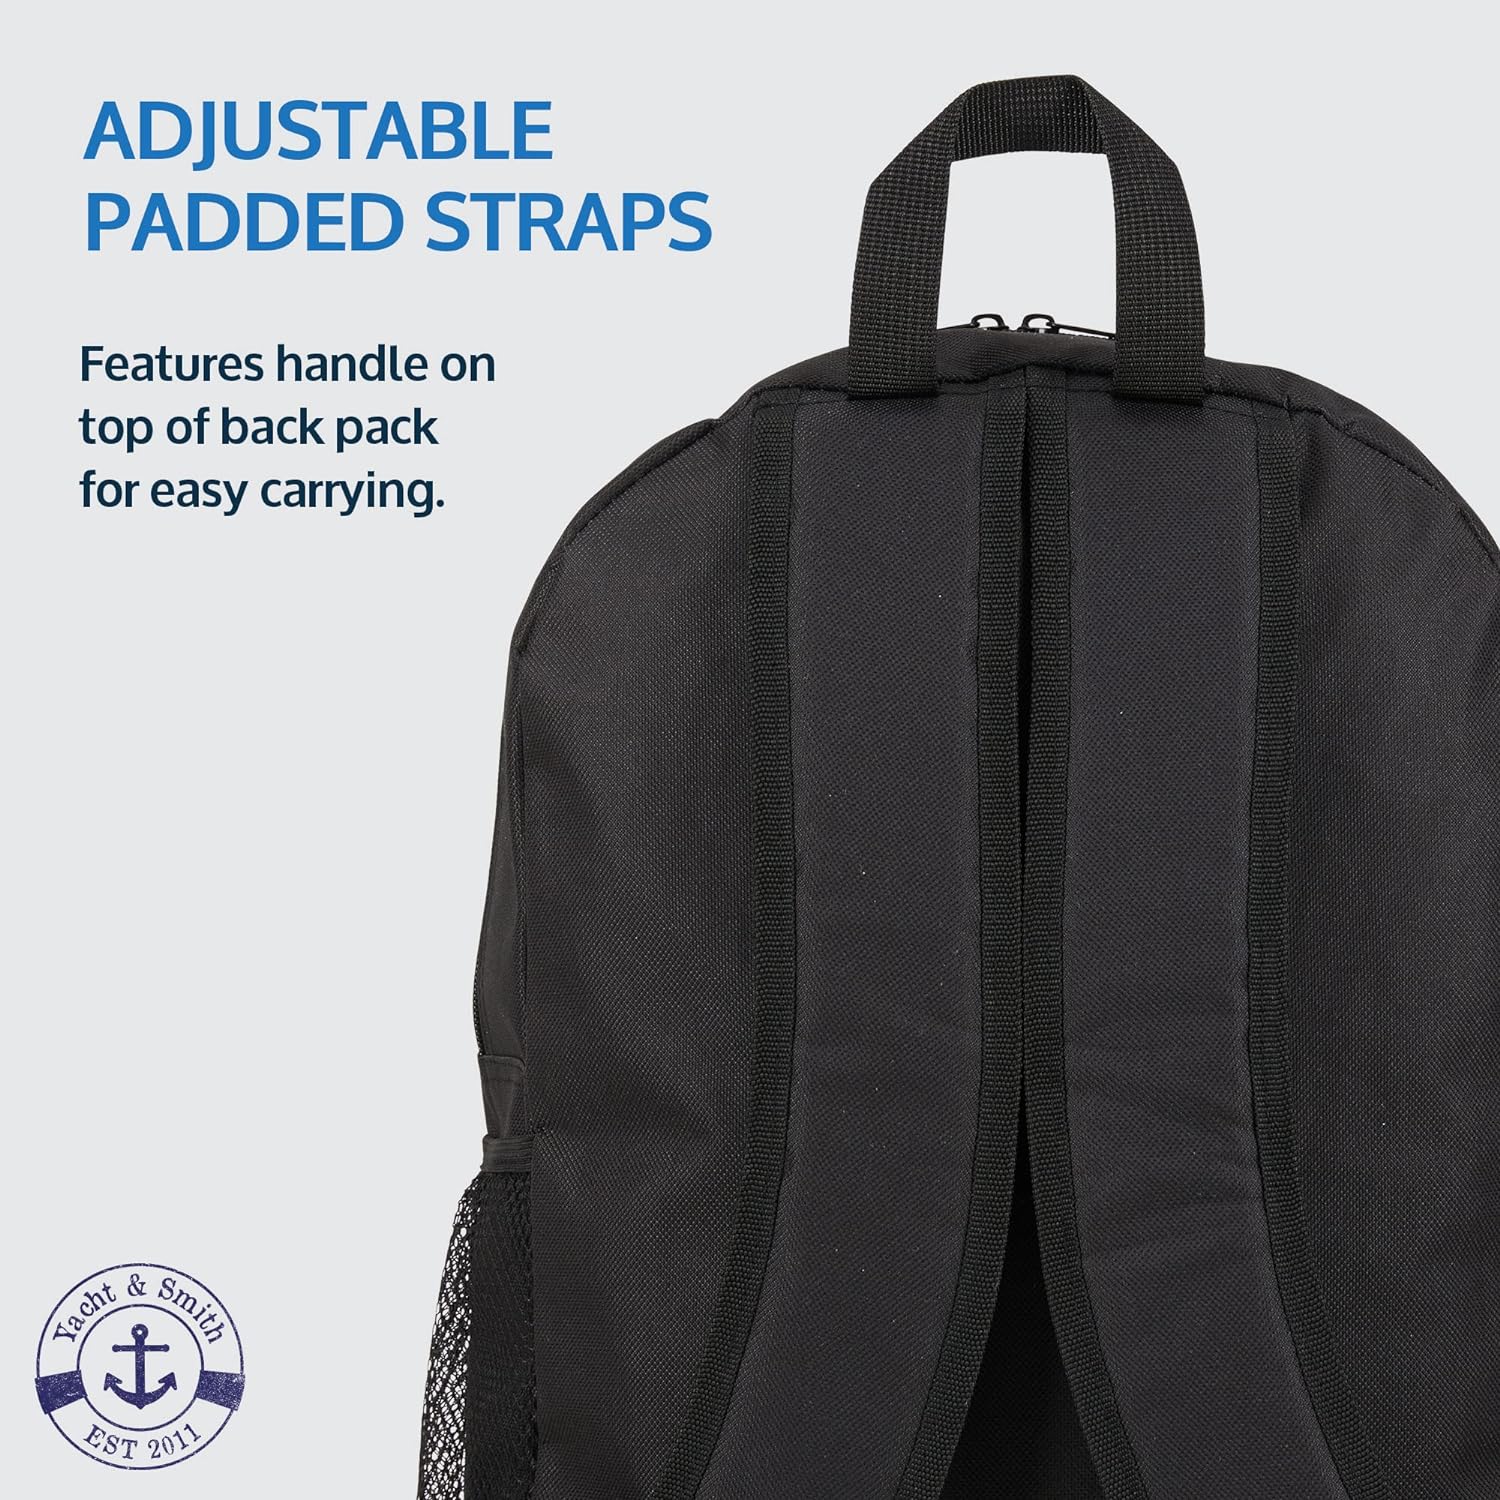 YACHT & SMITH 12 Pack 17 Inch Wholesale Backpacks for Kids, Case of Bookbags Water Resistant Knapsacks (12 Pack Black)